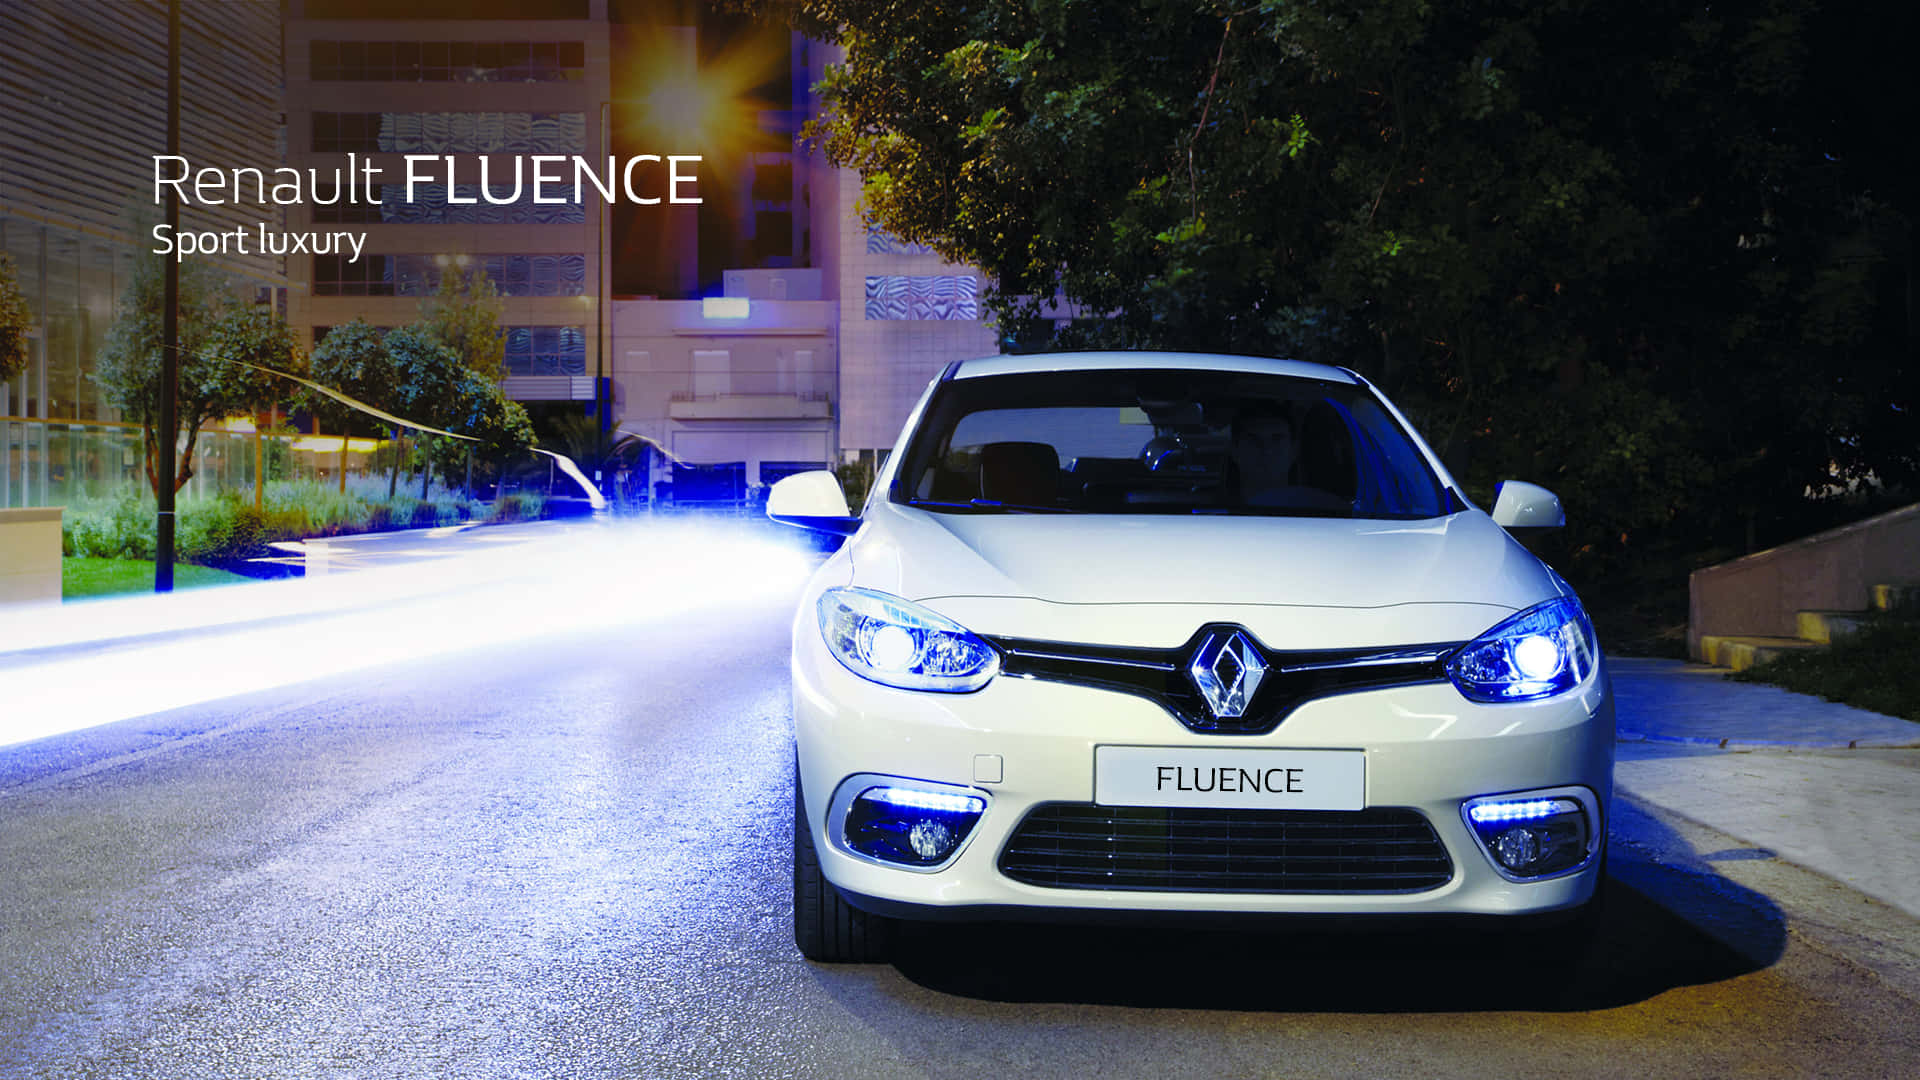 Sleek Renault Fluence in a Vibrant Cityscape Wallpaper